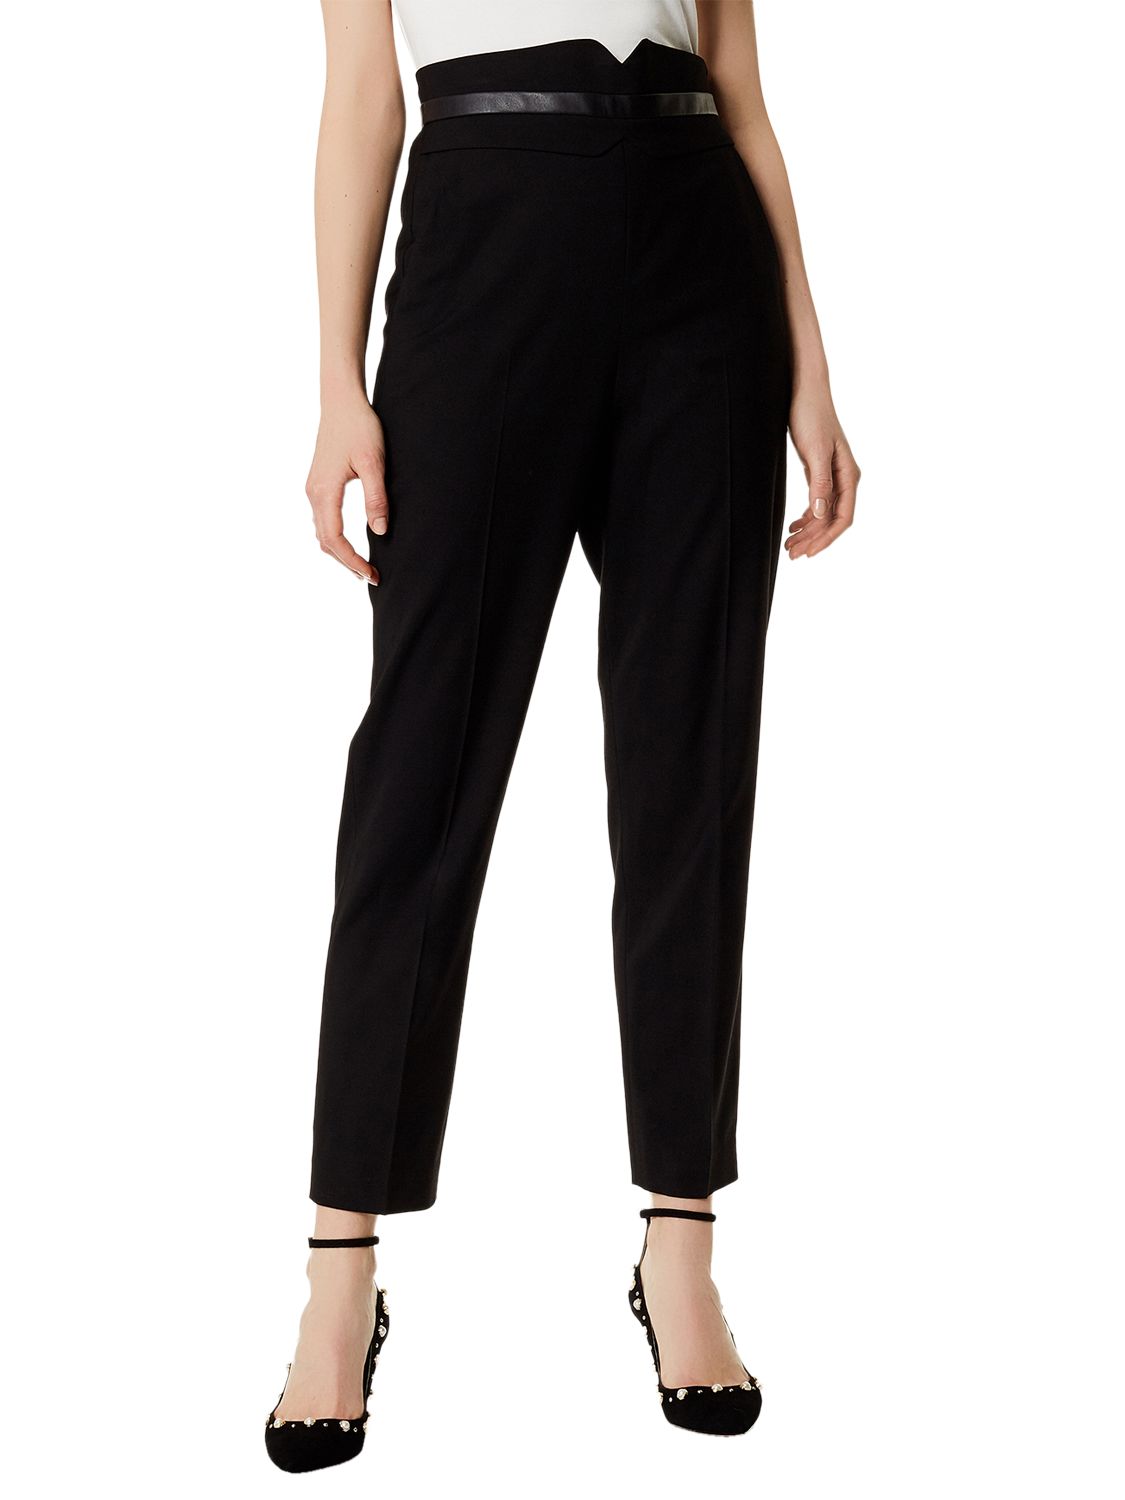 Karen Millen Tailored High Waisted Trousers, Black at John Lewis & Partners